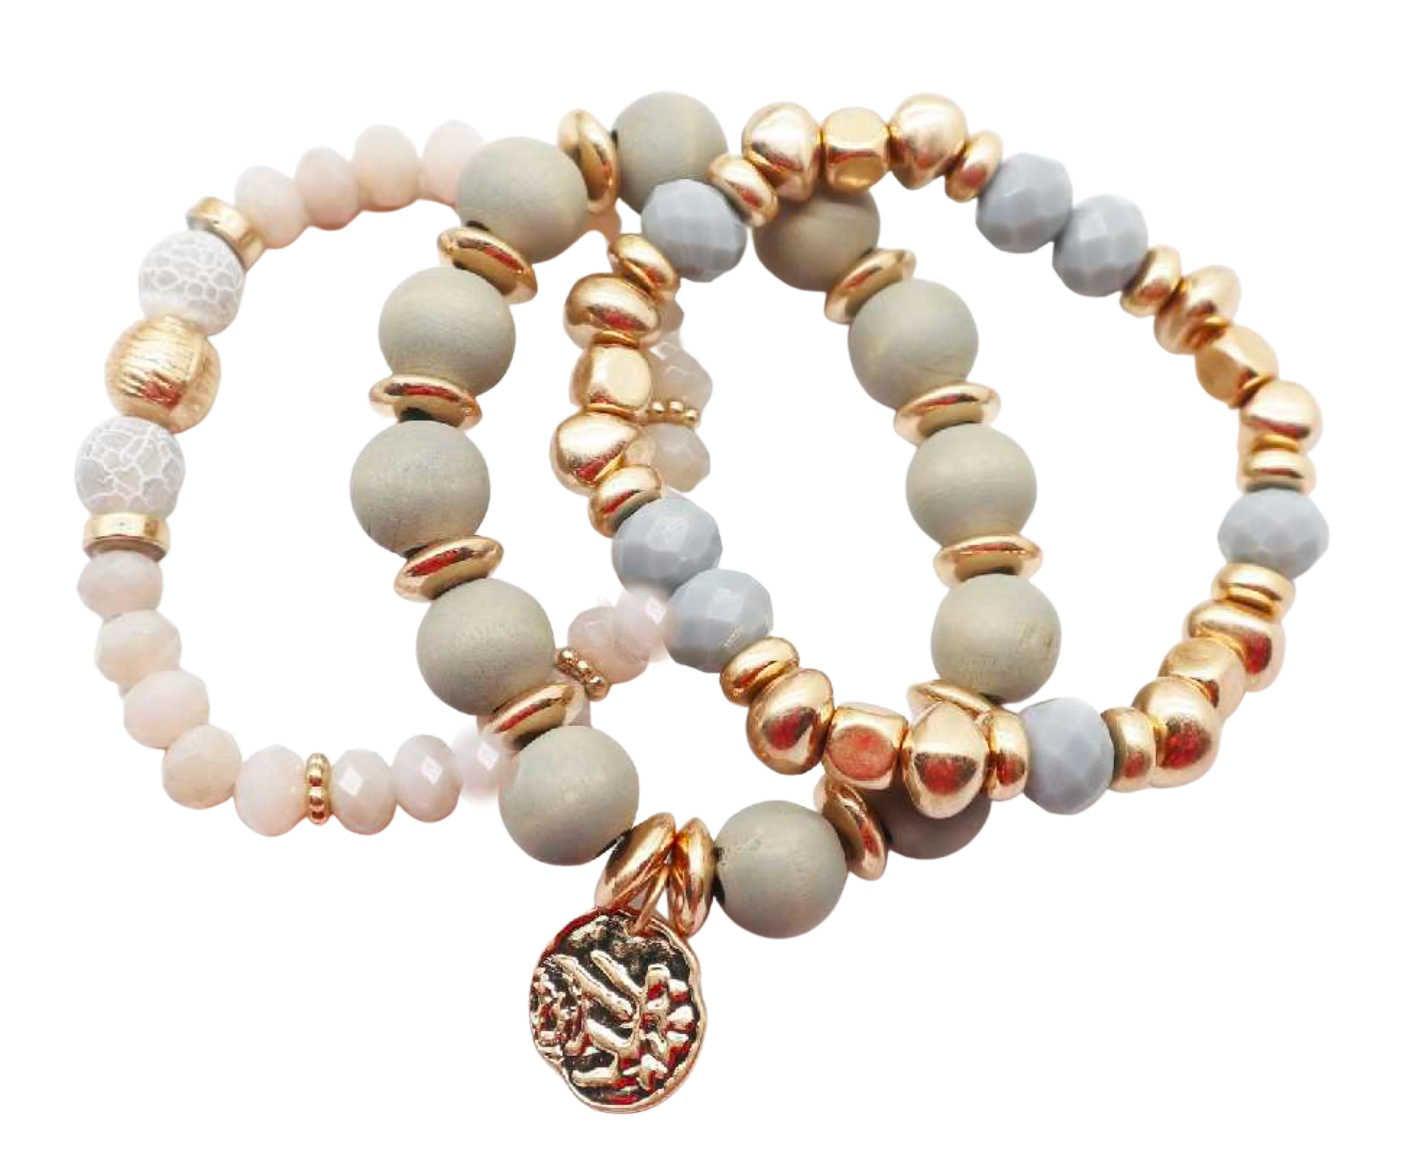 Luxury Bracelet Stack – Copper Rose Boutique